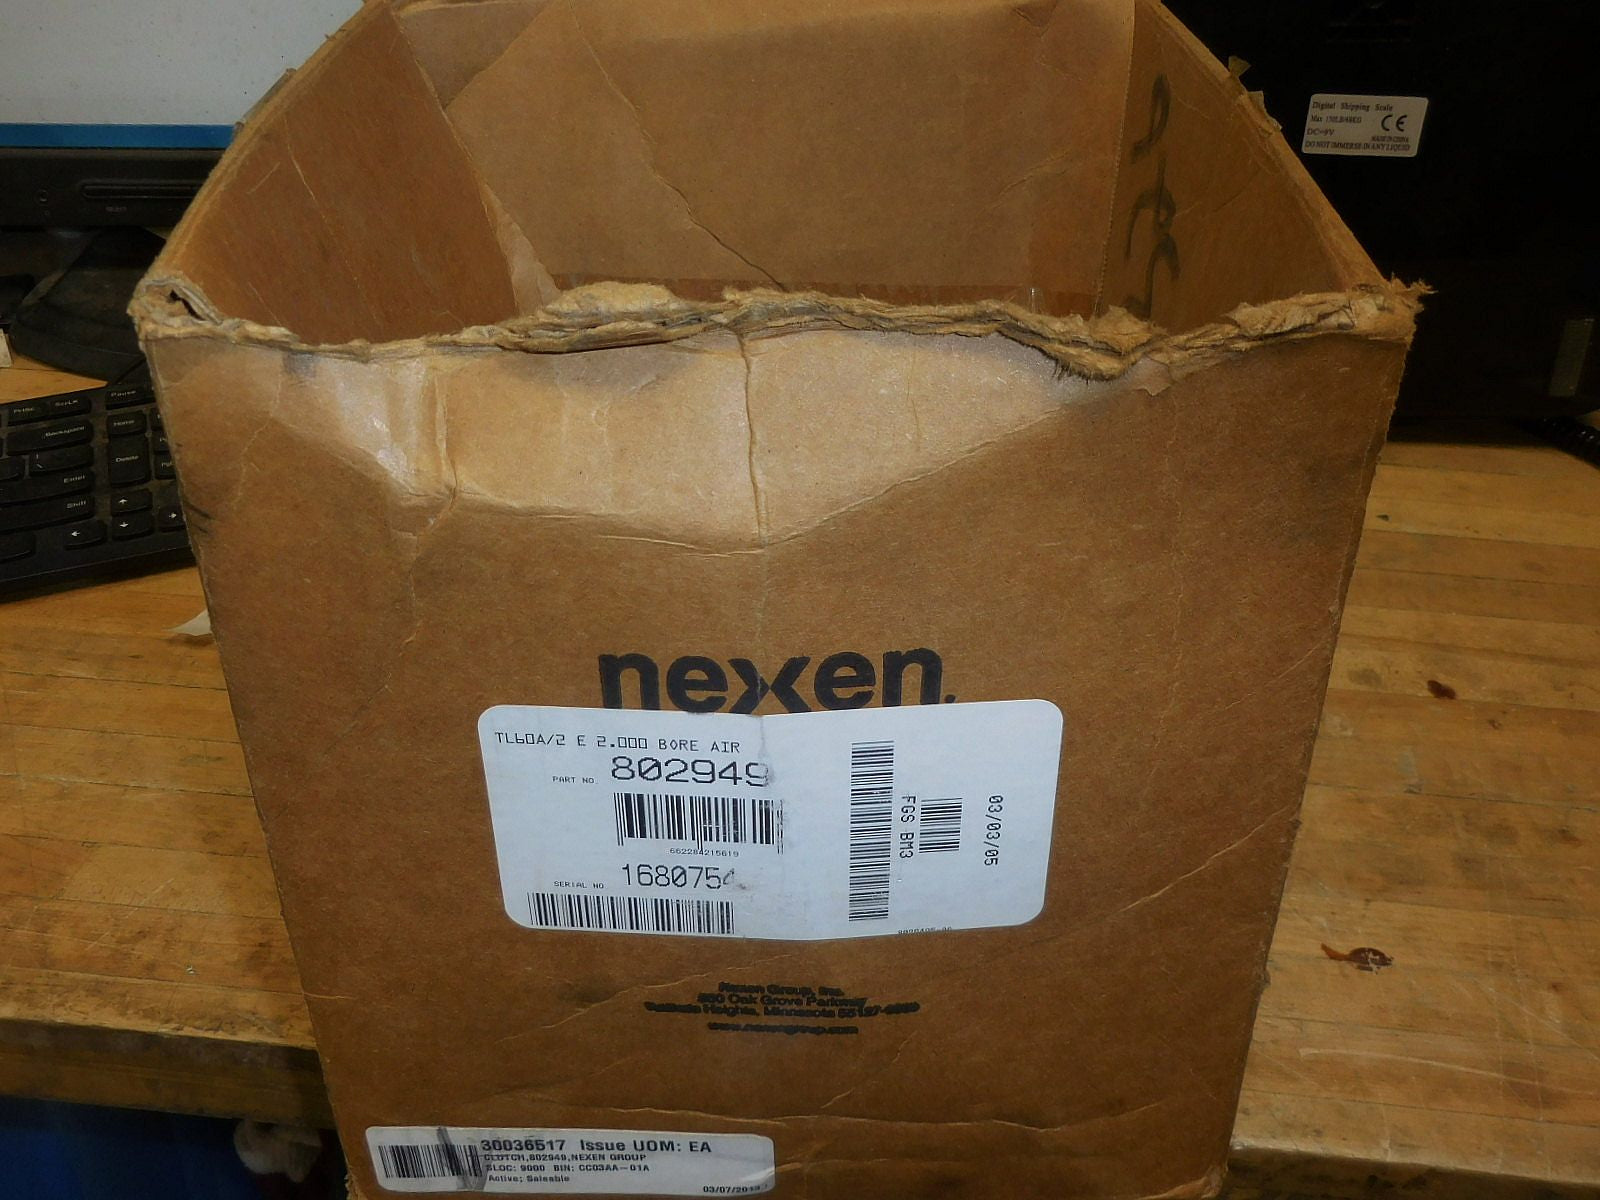 Nexen Enclosed Air Engaged Torque Limiters Clutch 802949 TL60A/2-E 2" BORE New